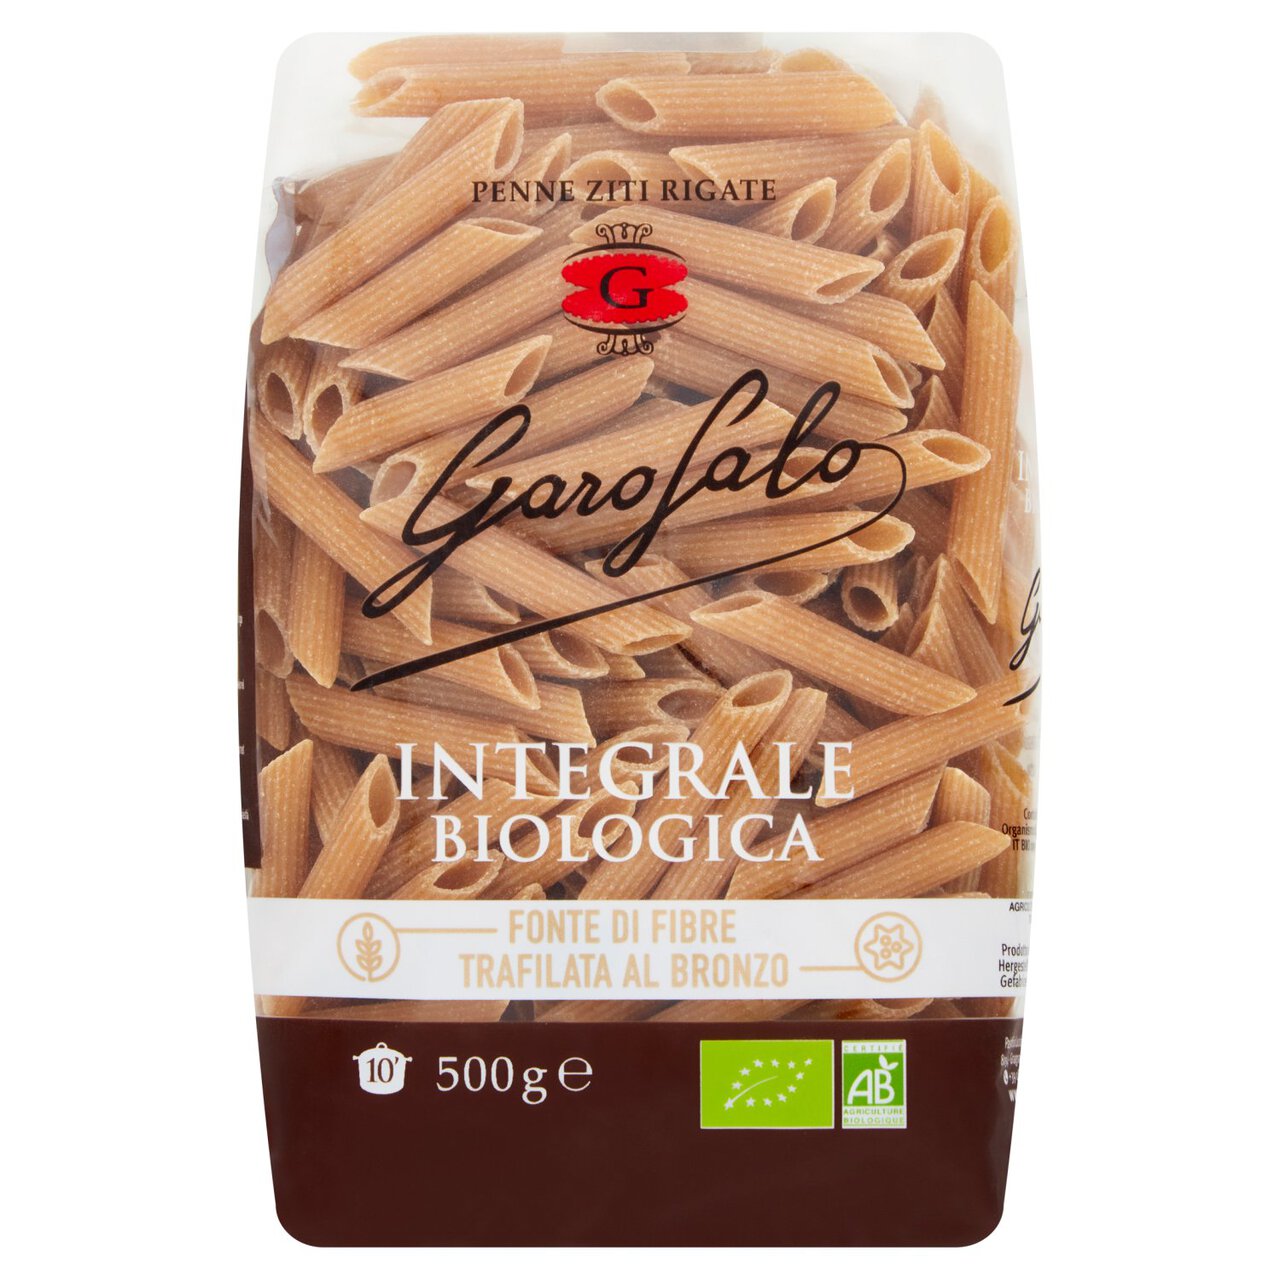 Garofalo Organic Whole Wheat Penne Dry Pasta 500g